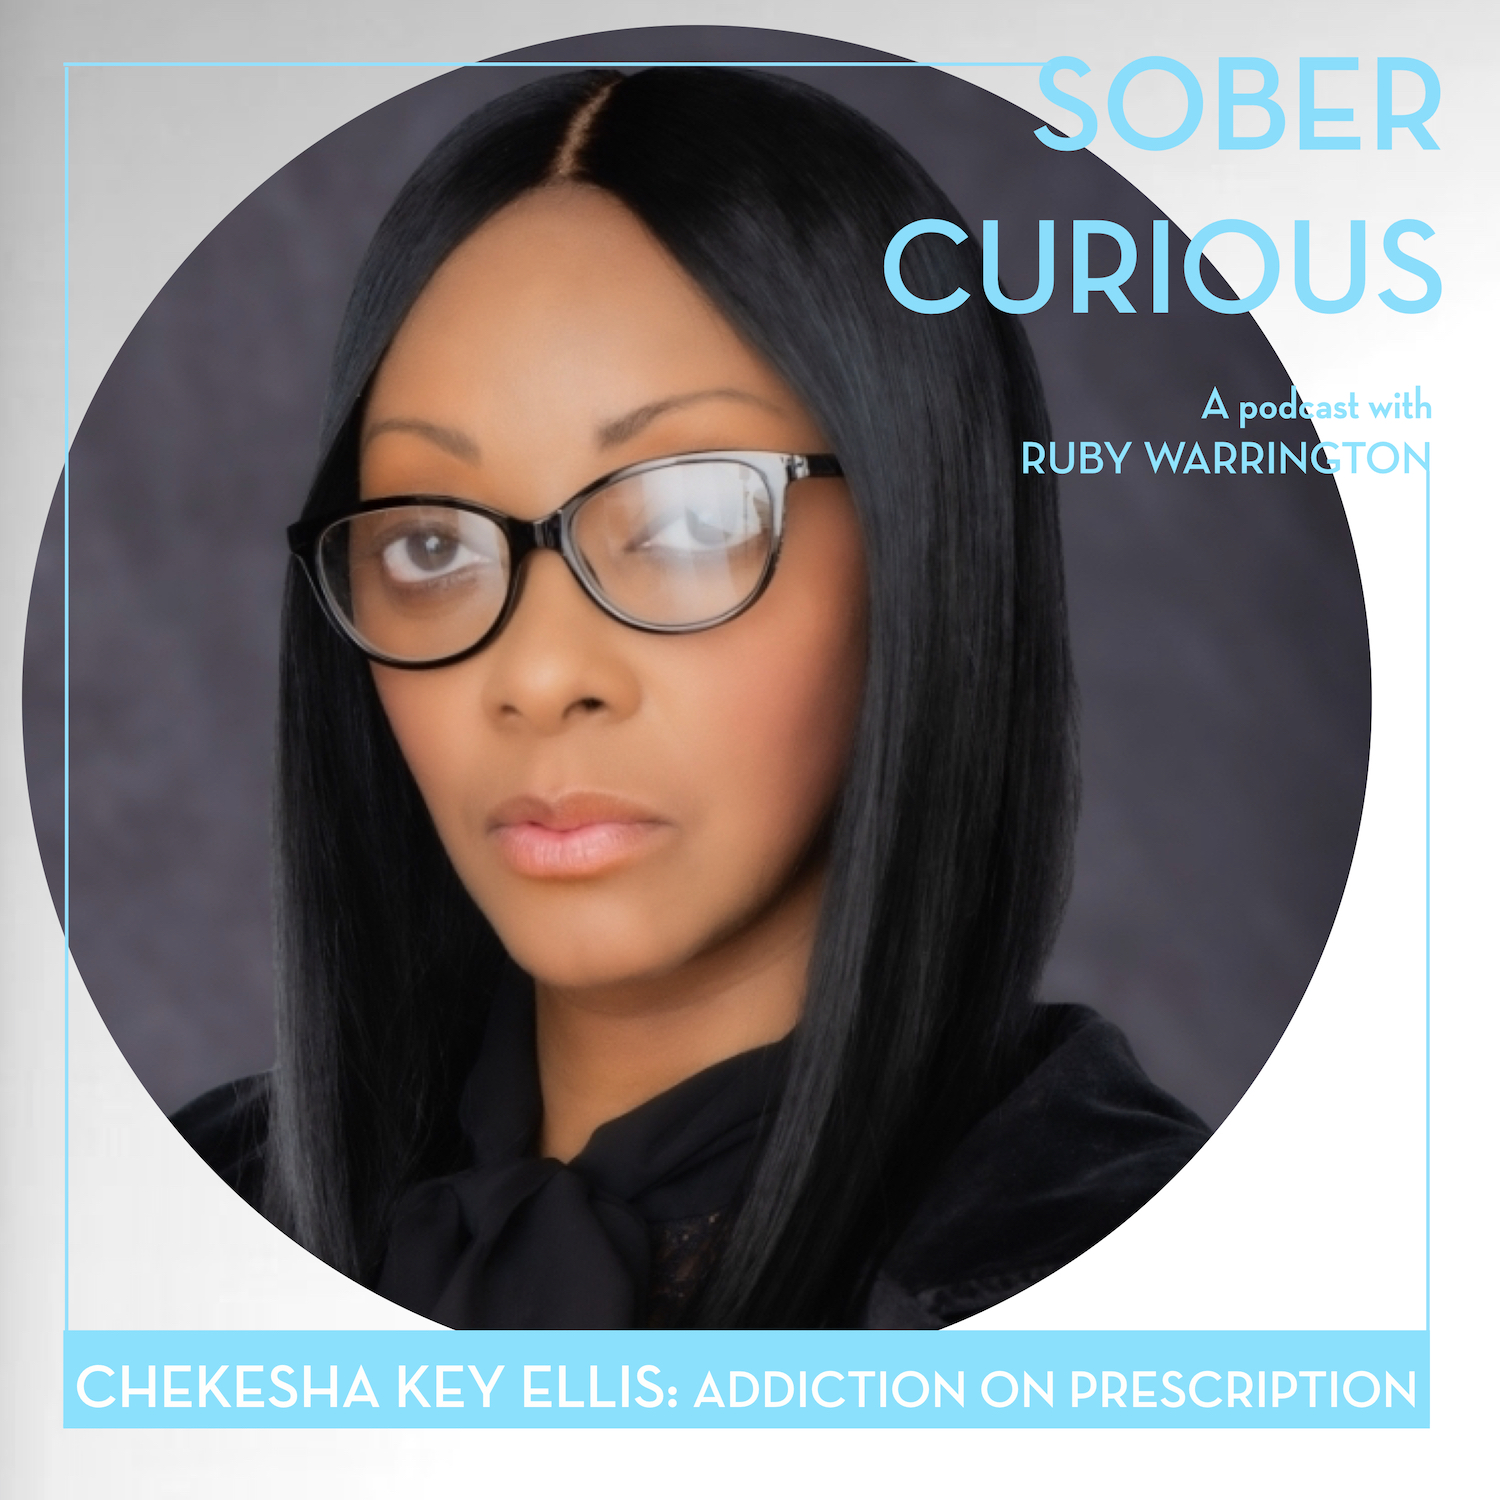 Chekesha Kay Ellis sober curious podcast ruby warrington